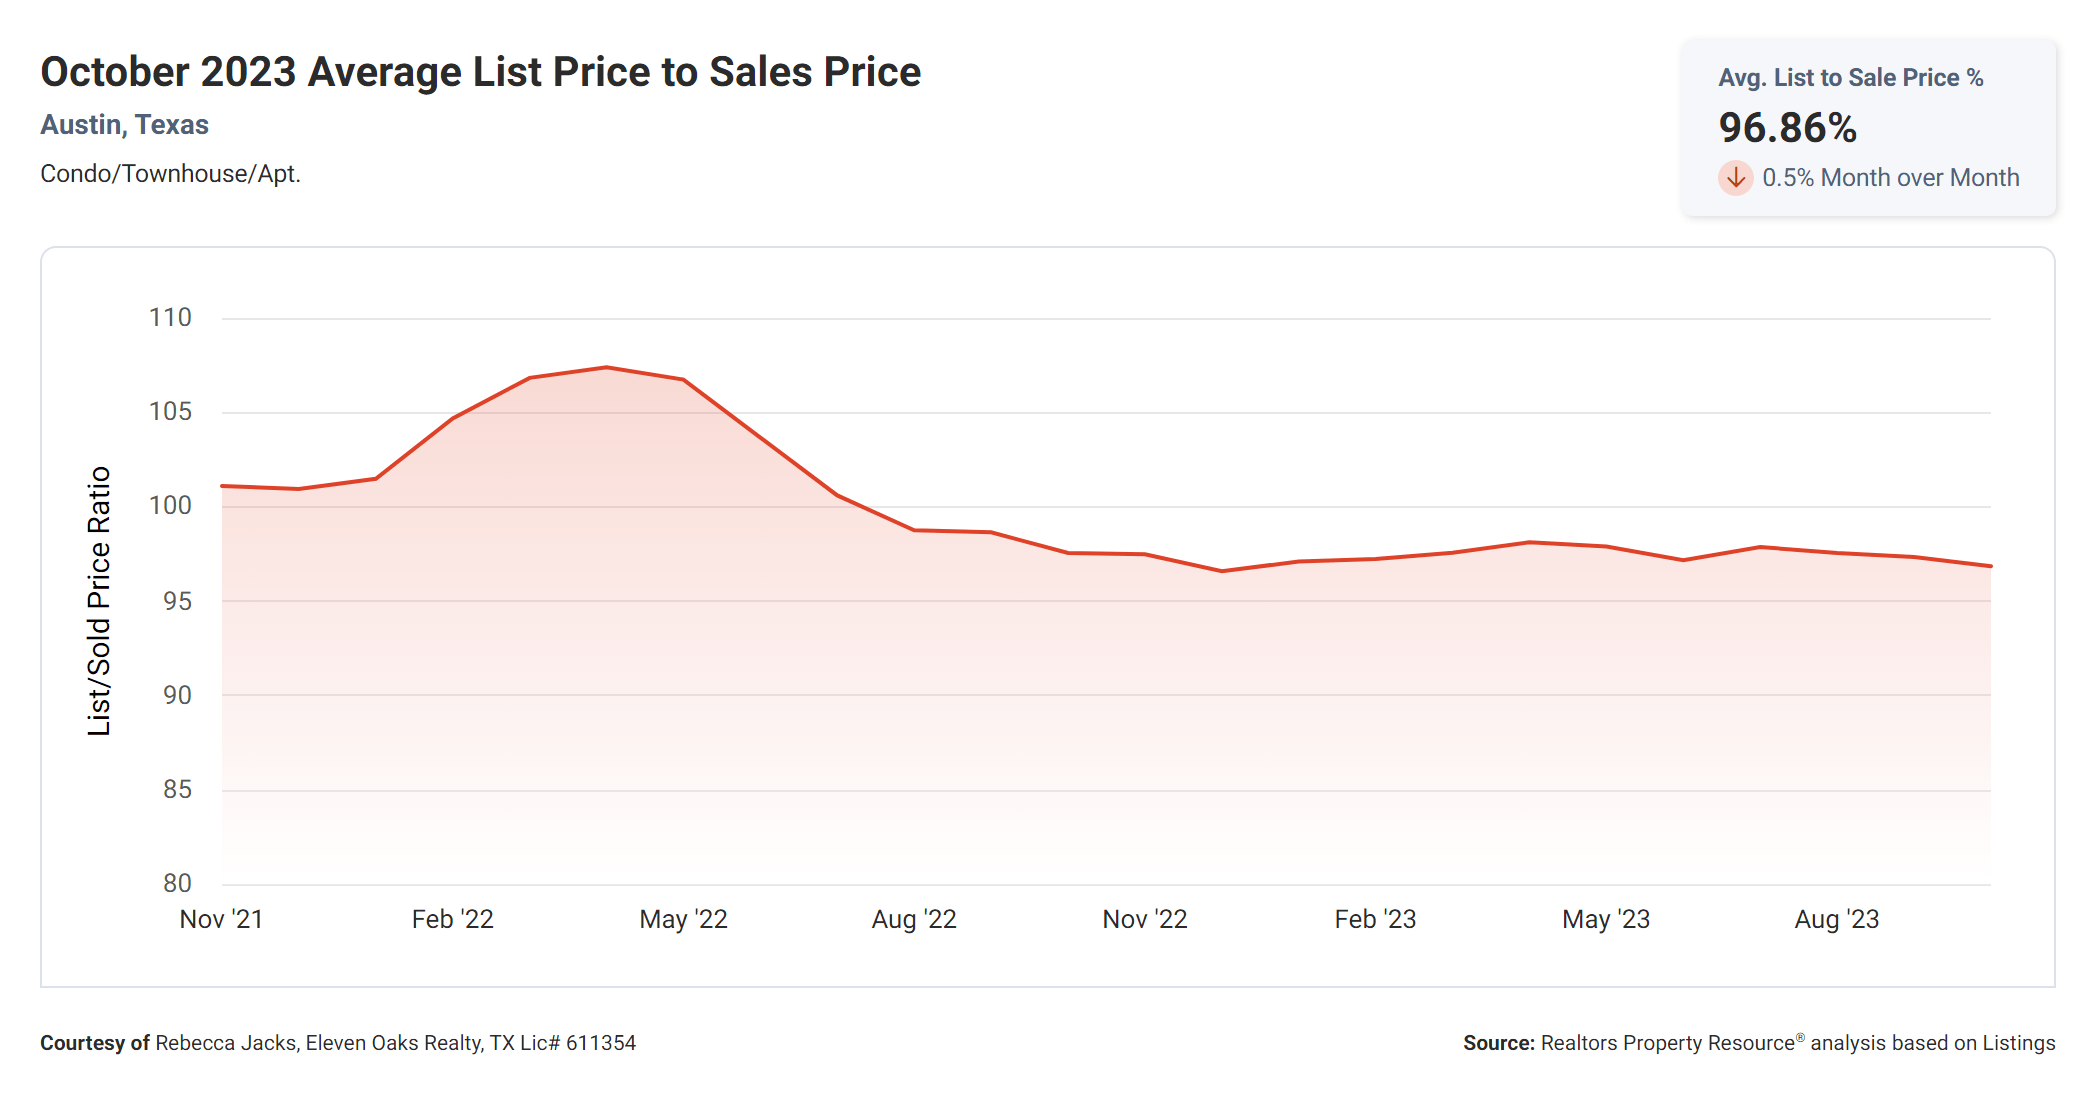 October 2023 Austin condo average list to sales price